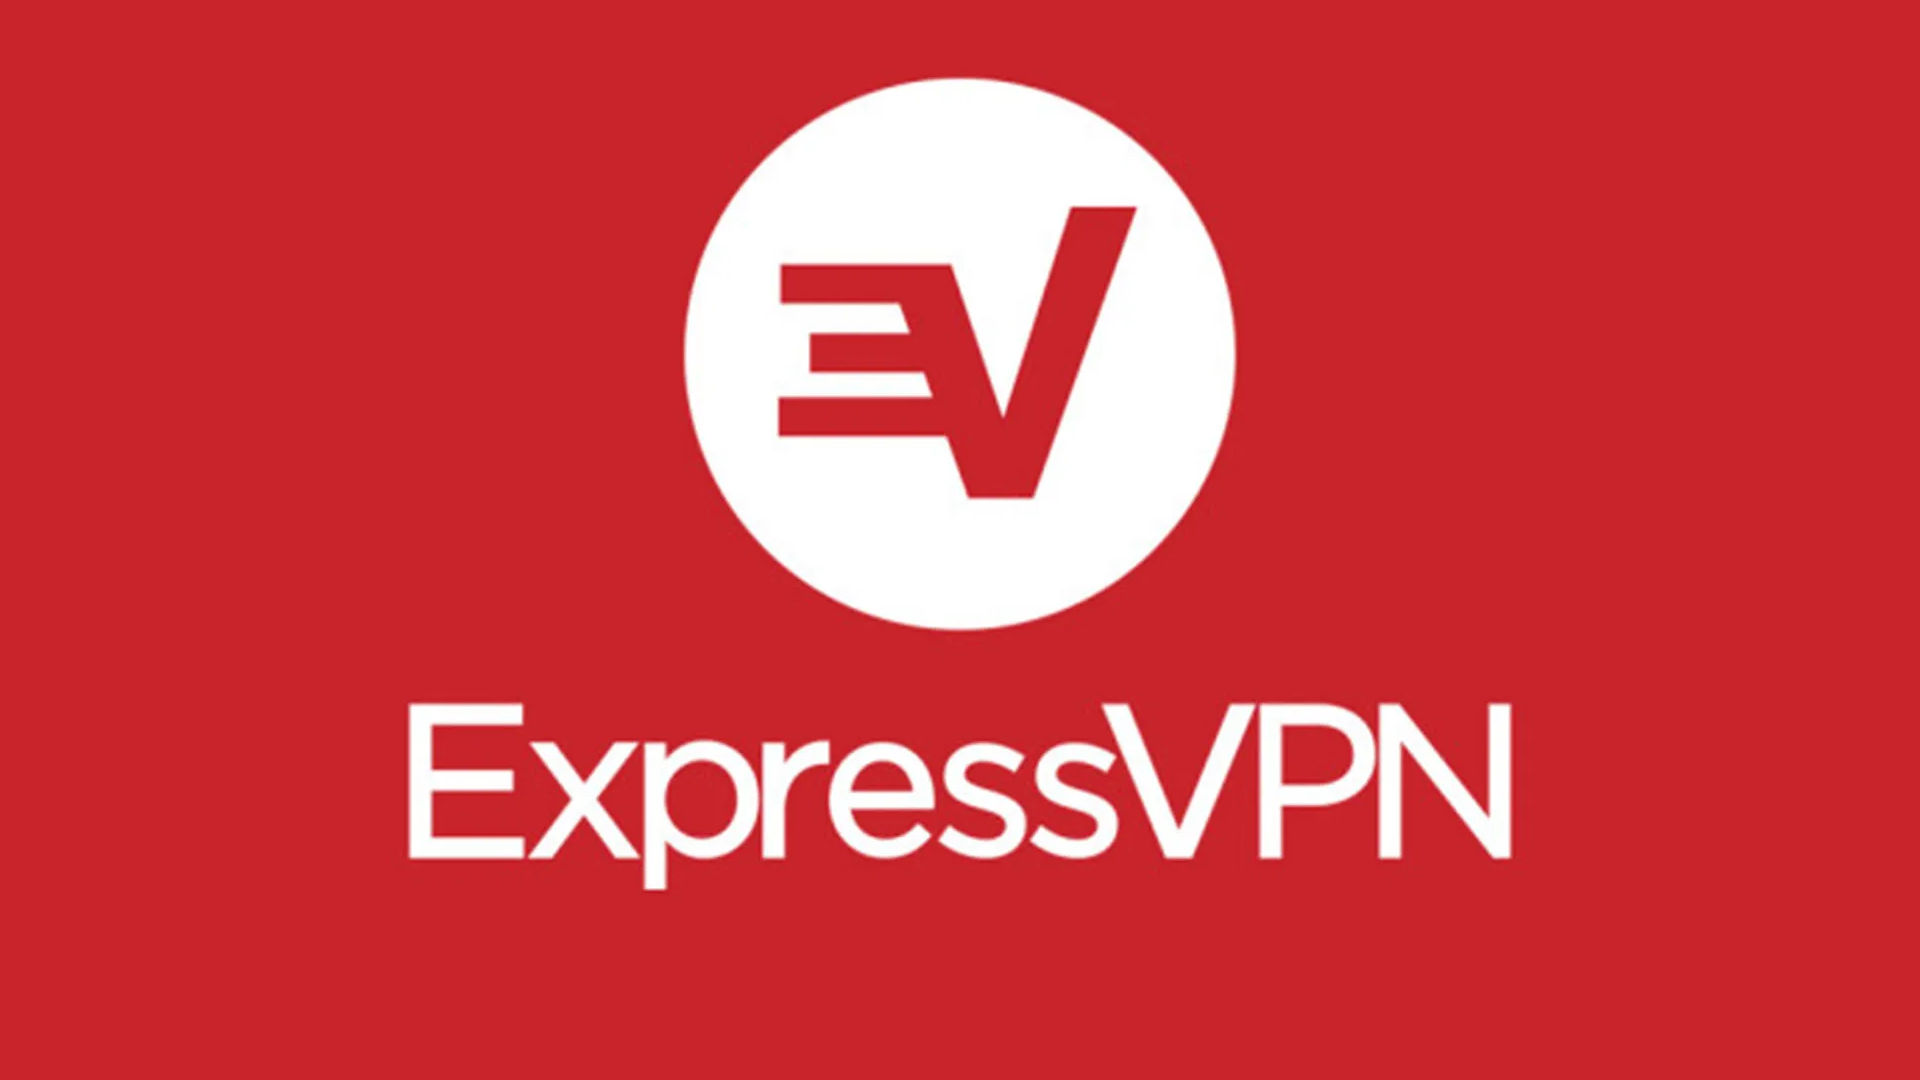 Best Amazon Prime VPN: ExpressVPN. Image shows the company logo.